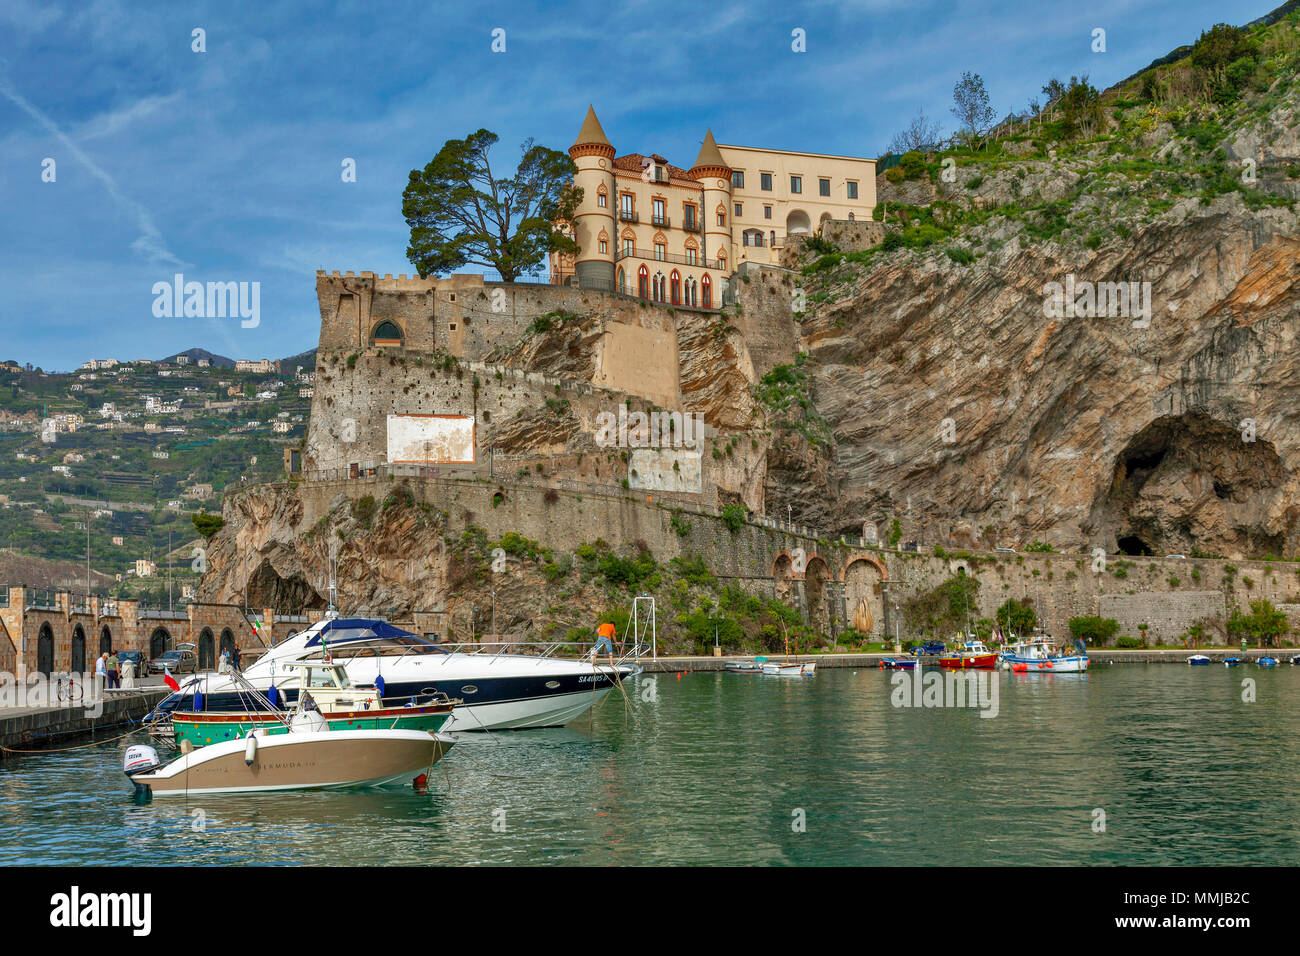 Port with Palazzo Mezzacapo, Maiori, Amalfi Coast, Province of Salerno, Campania, Italy Stock Photo